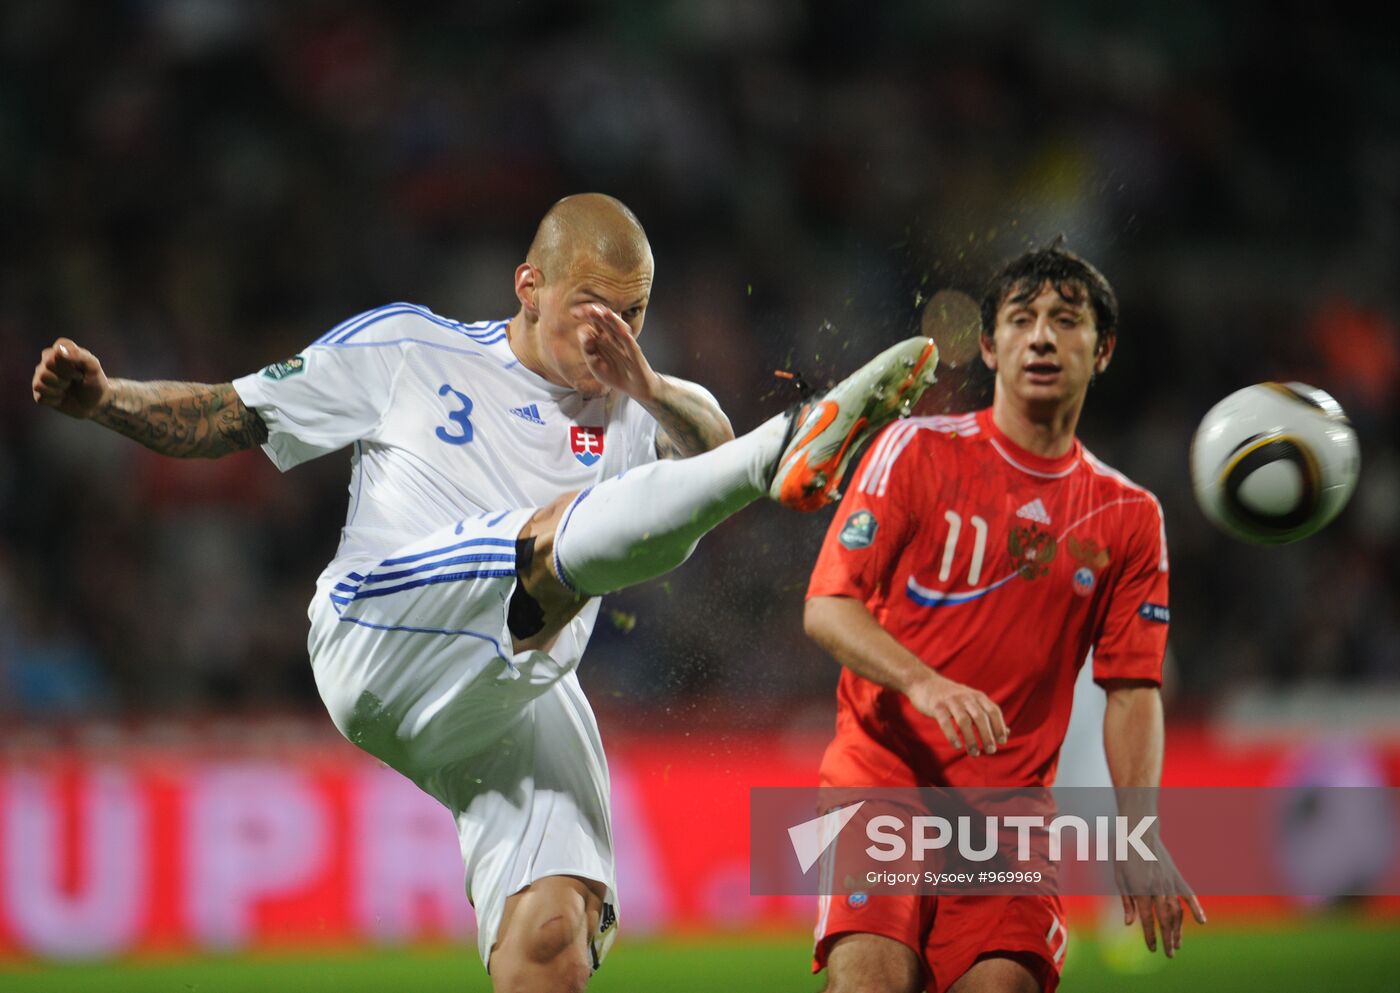 UEFA Euro 2012 qualifying round. Slovakia vs. Russia 0-1